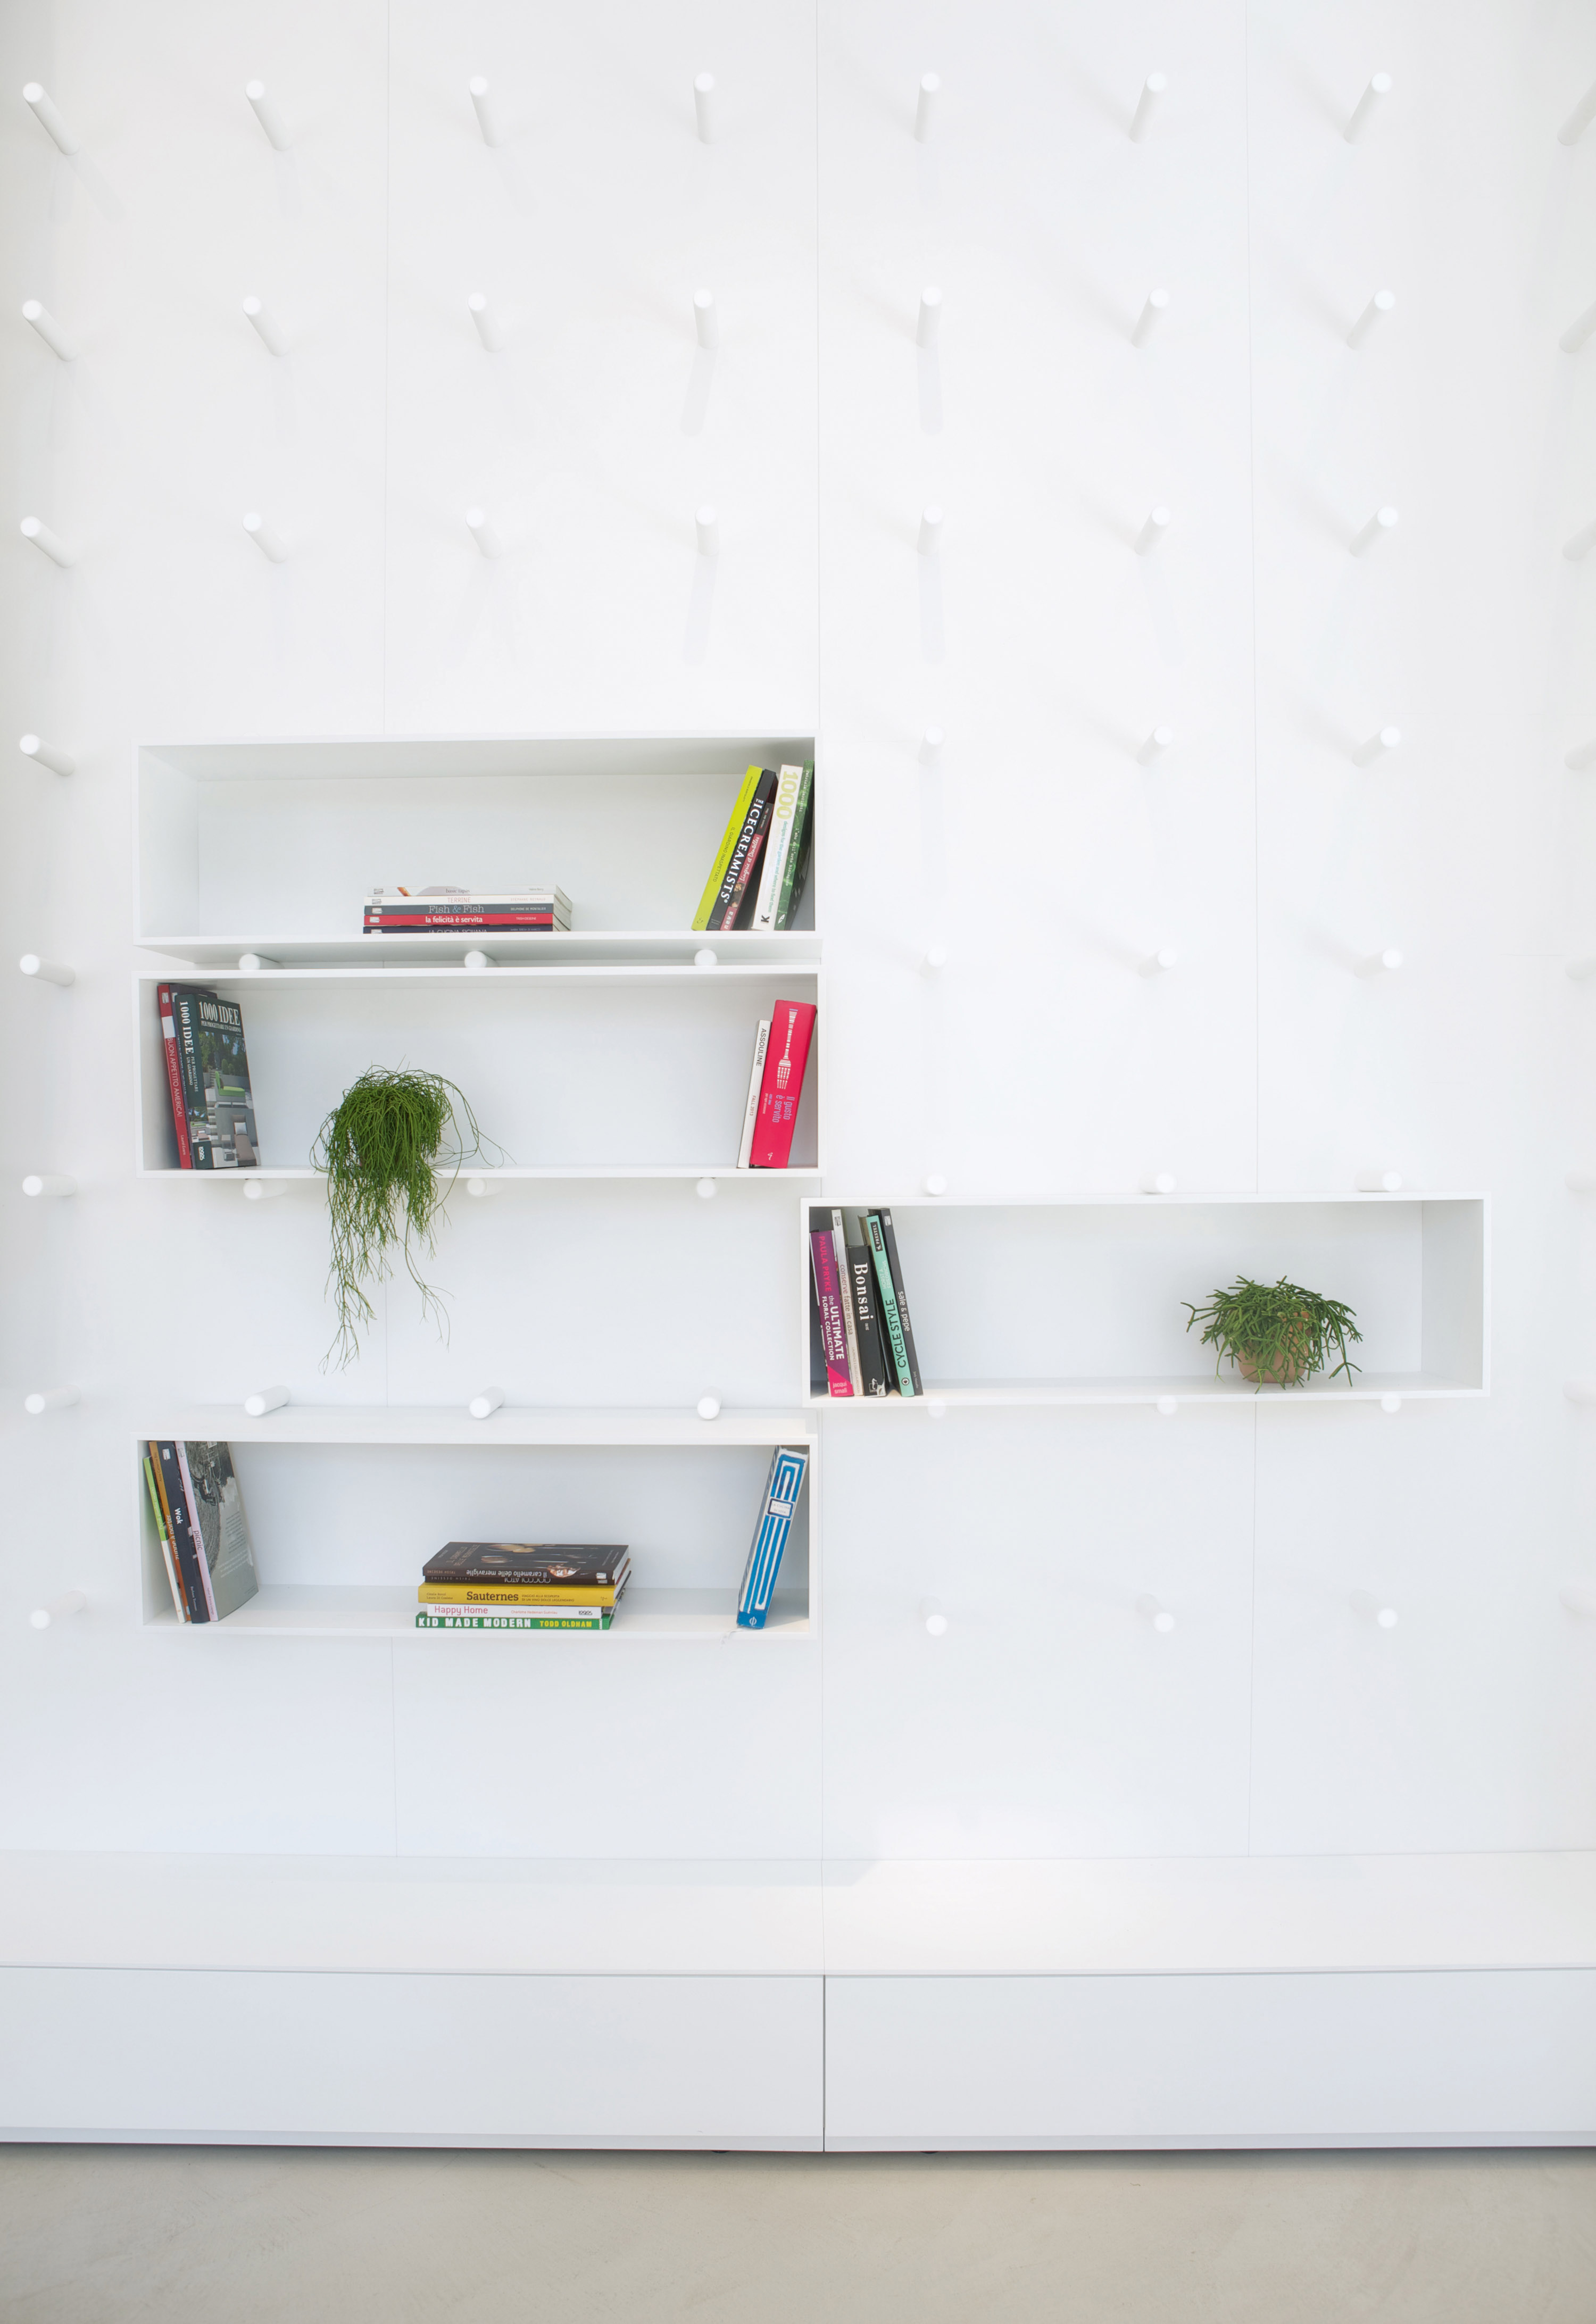 red dot awards aris architect Heni Chaouech bookshelf dot